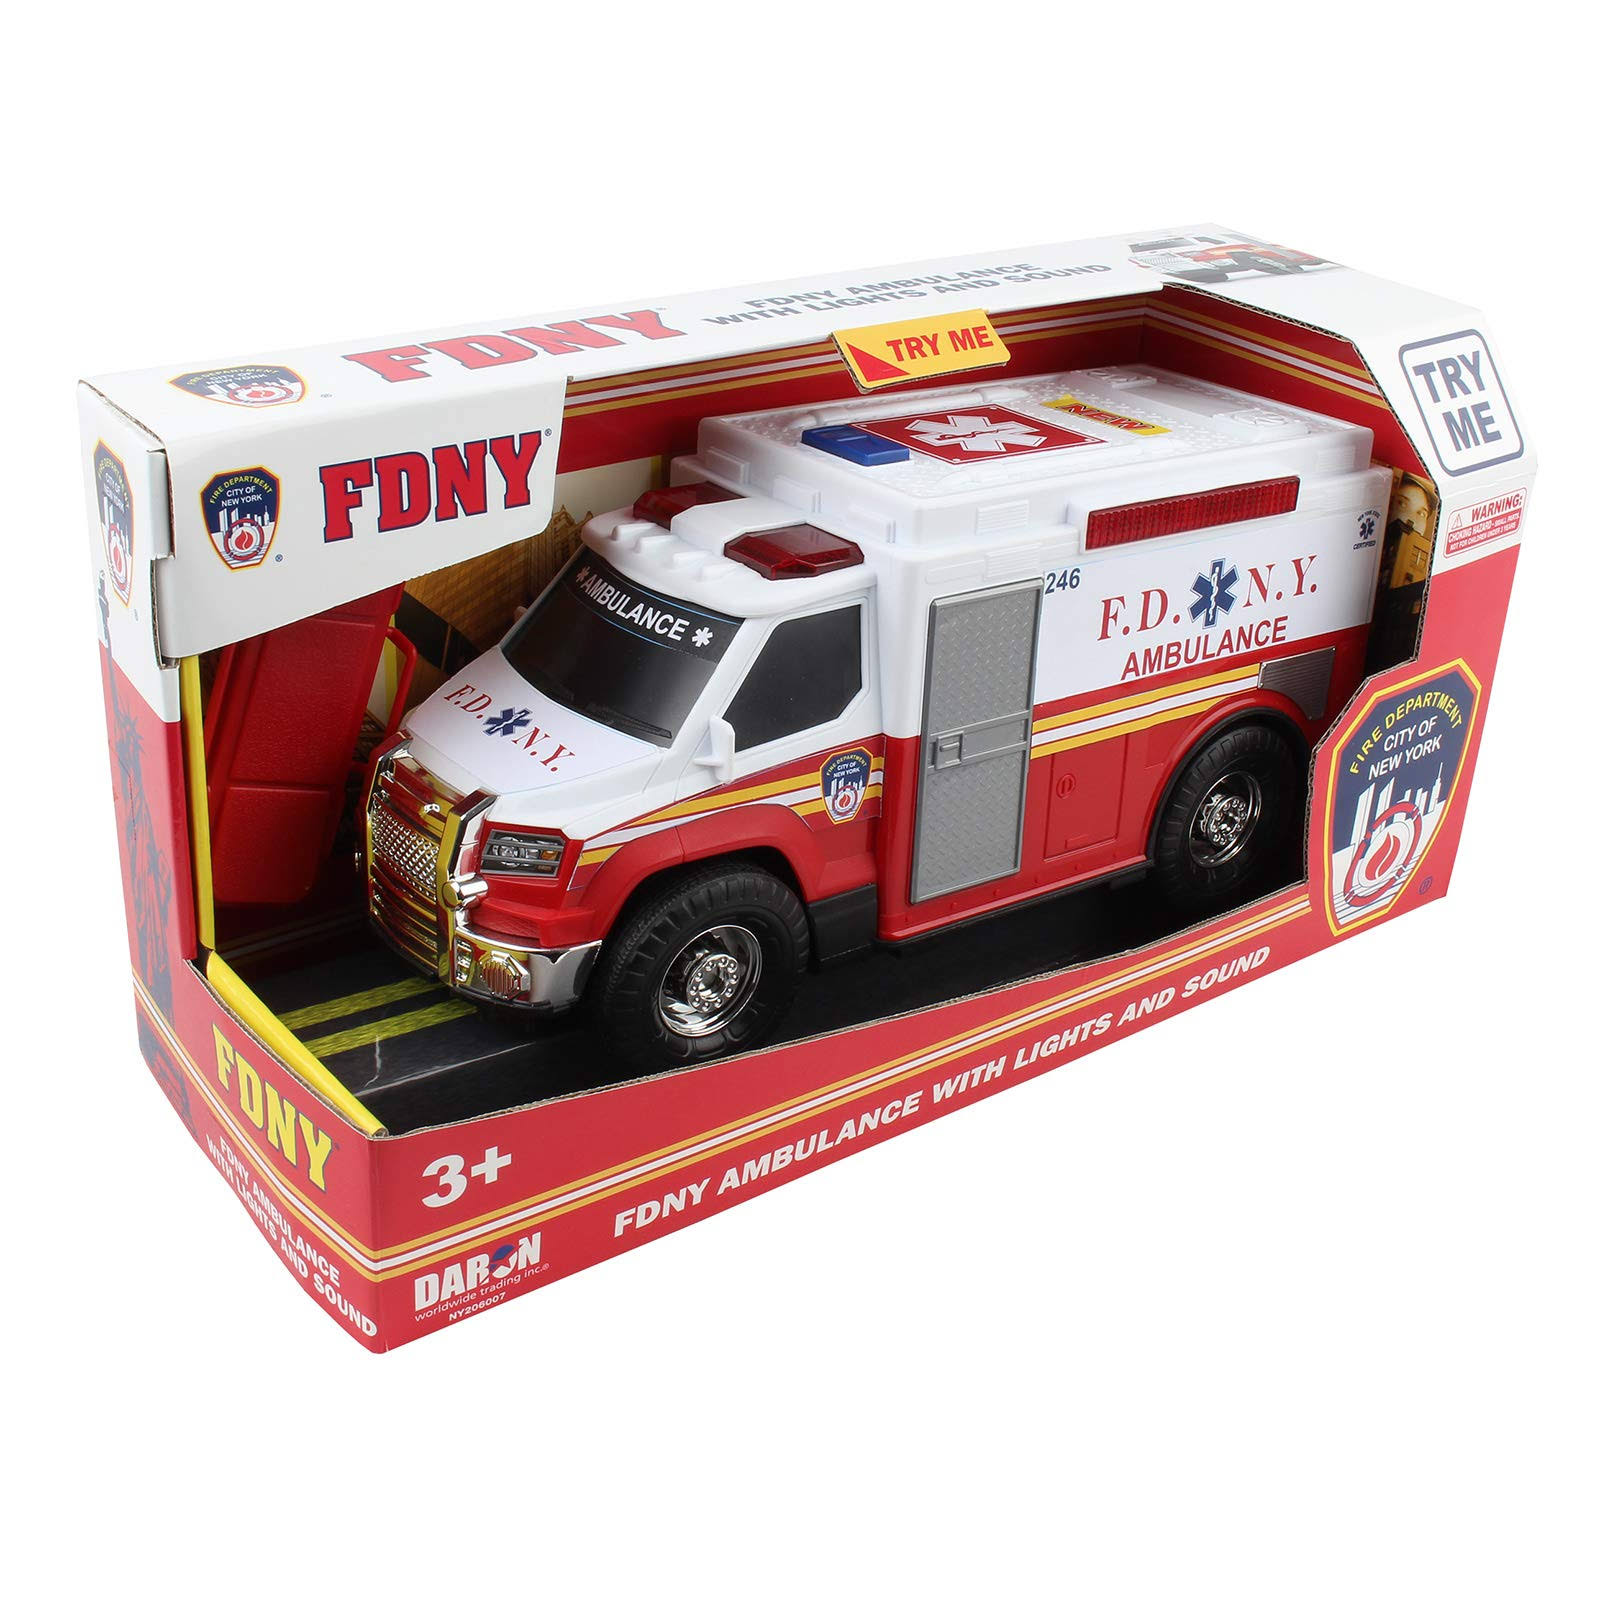 Daron NY206007 Fdny Ambulance w/Lights & Sound